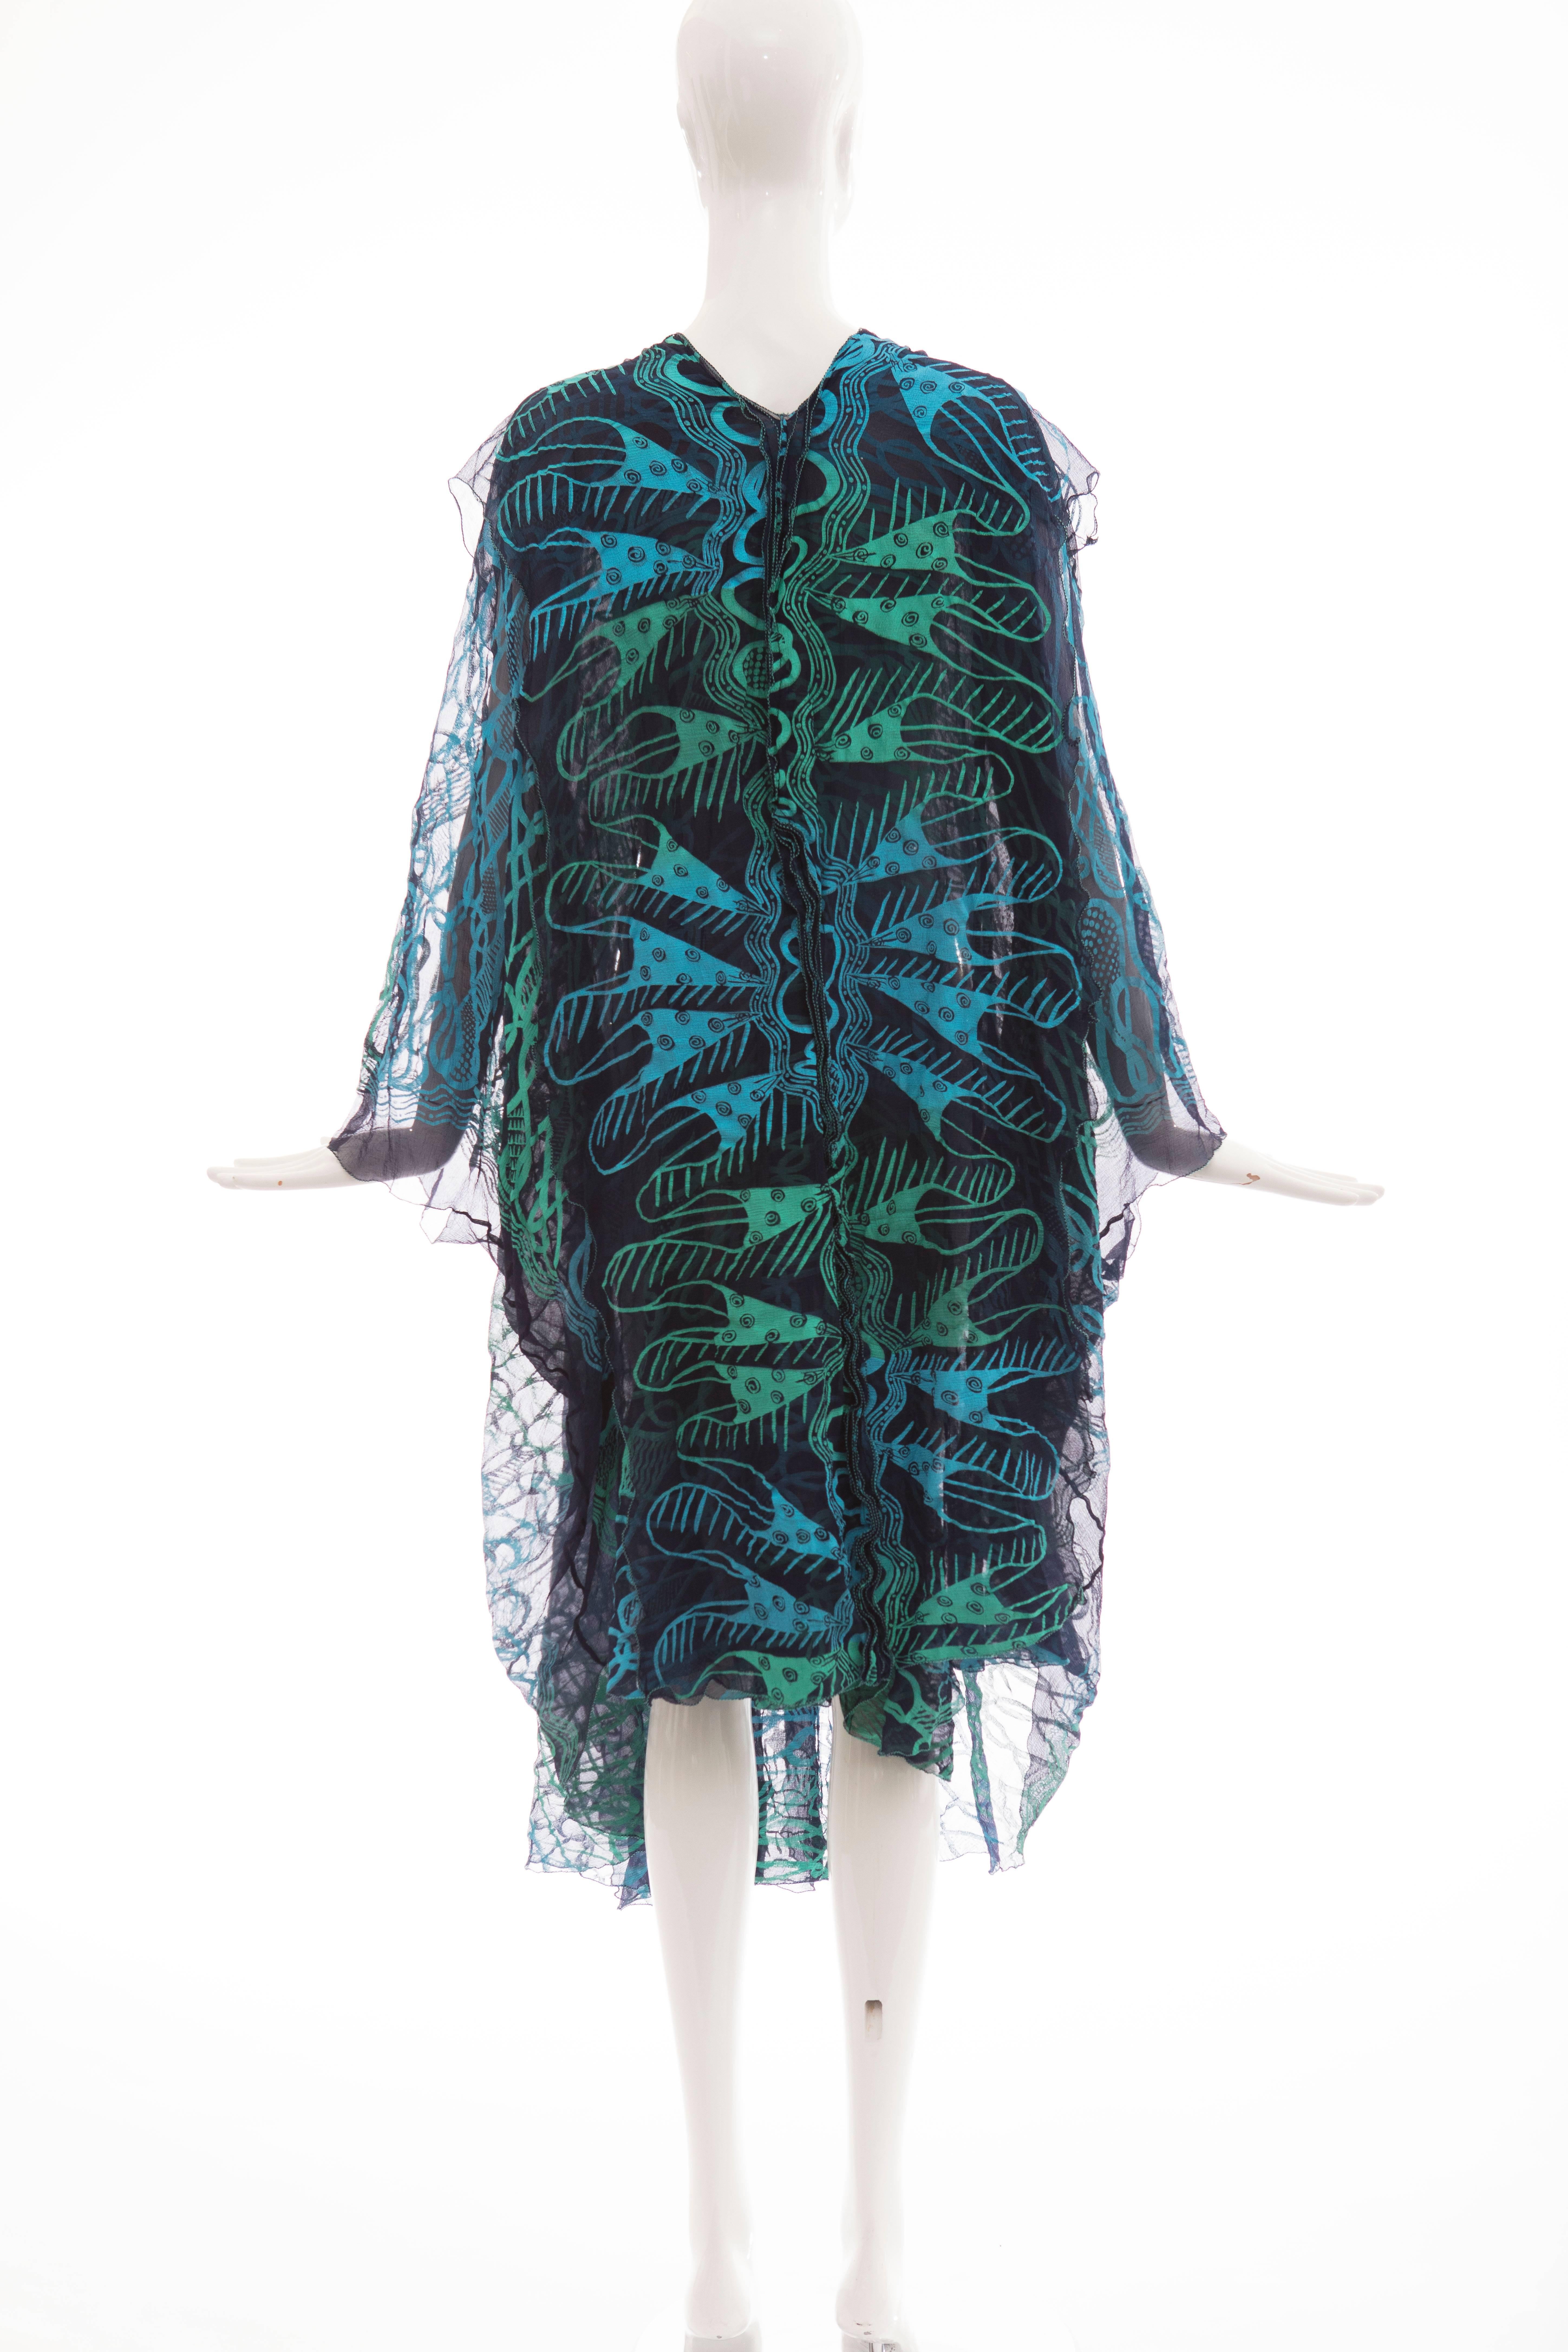 Zandra Rhodes, circa 1970's printed silk navy blue, turquoise, mint green kaftan.

UK. Medium

Shoulders - 17in, Bust - 36in, Waist - 28in, Hips - 37in. Length 53